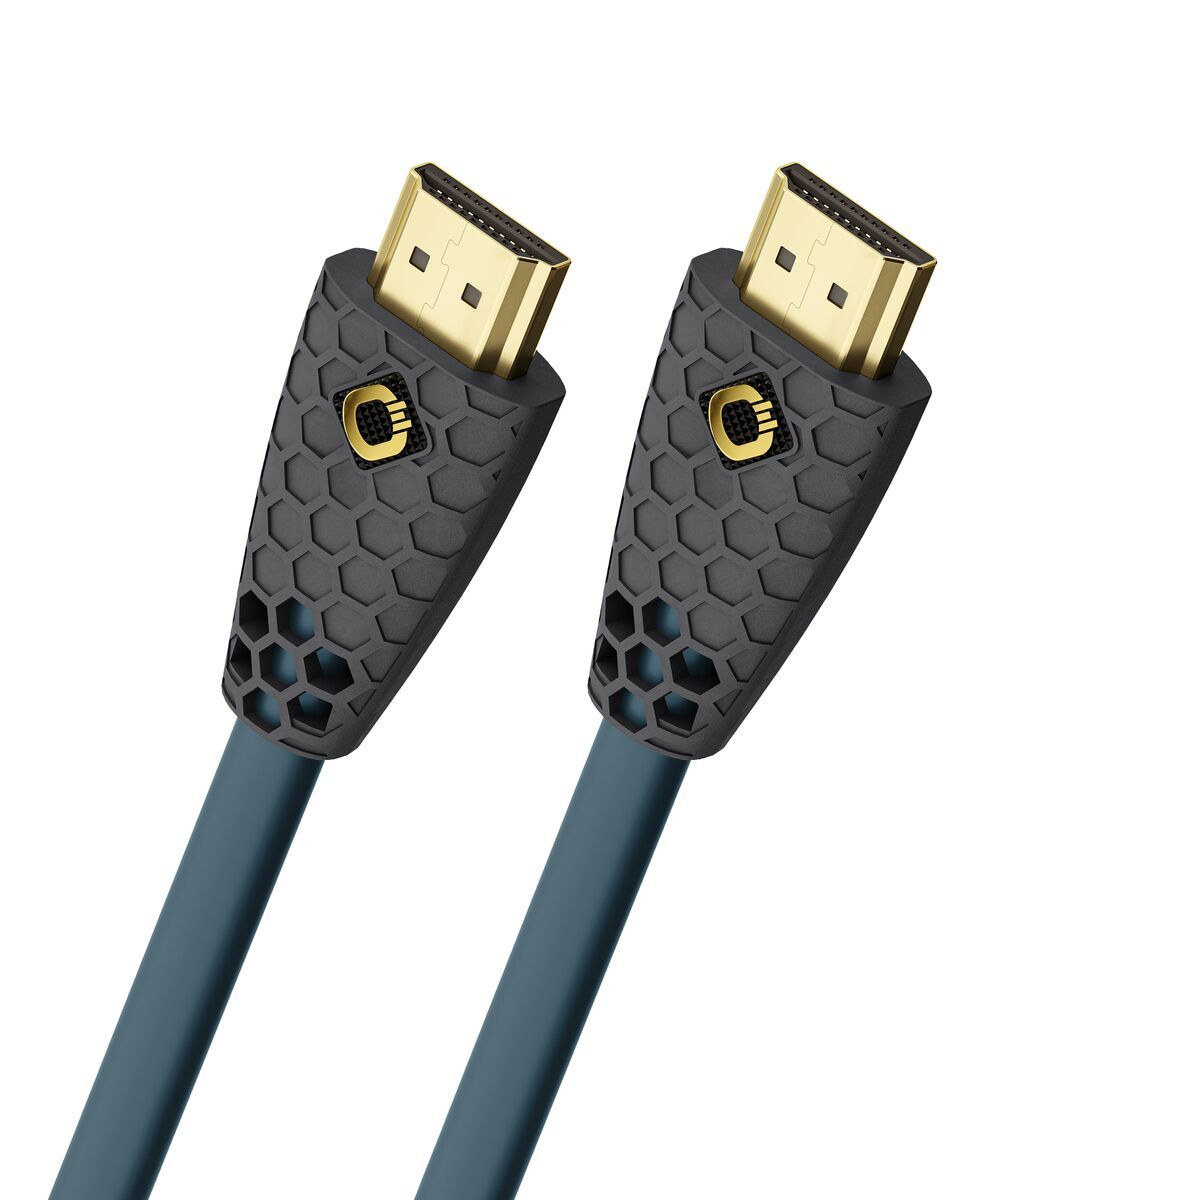 Vogel's Oehlbach Flex Evolution HDMI® Cable (3 meter) Black Product